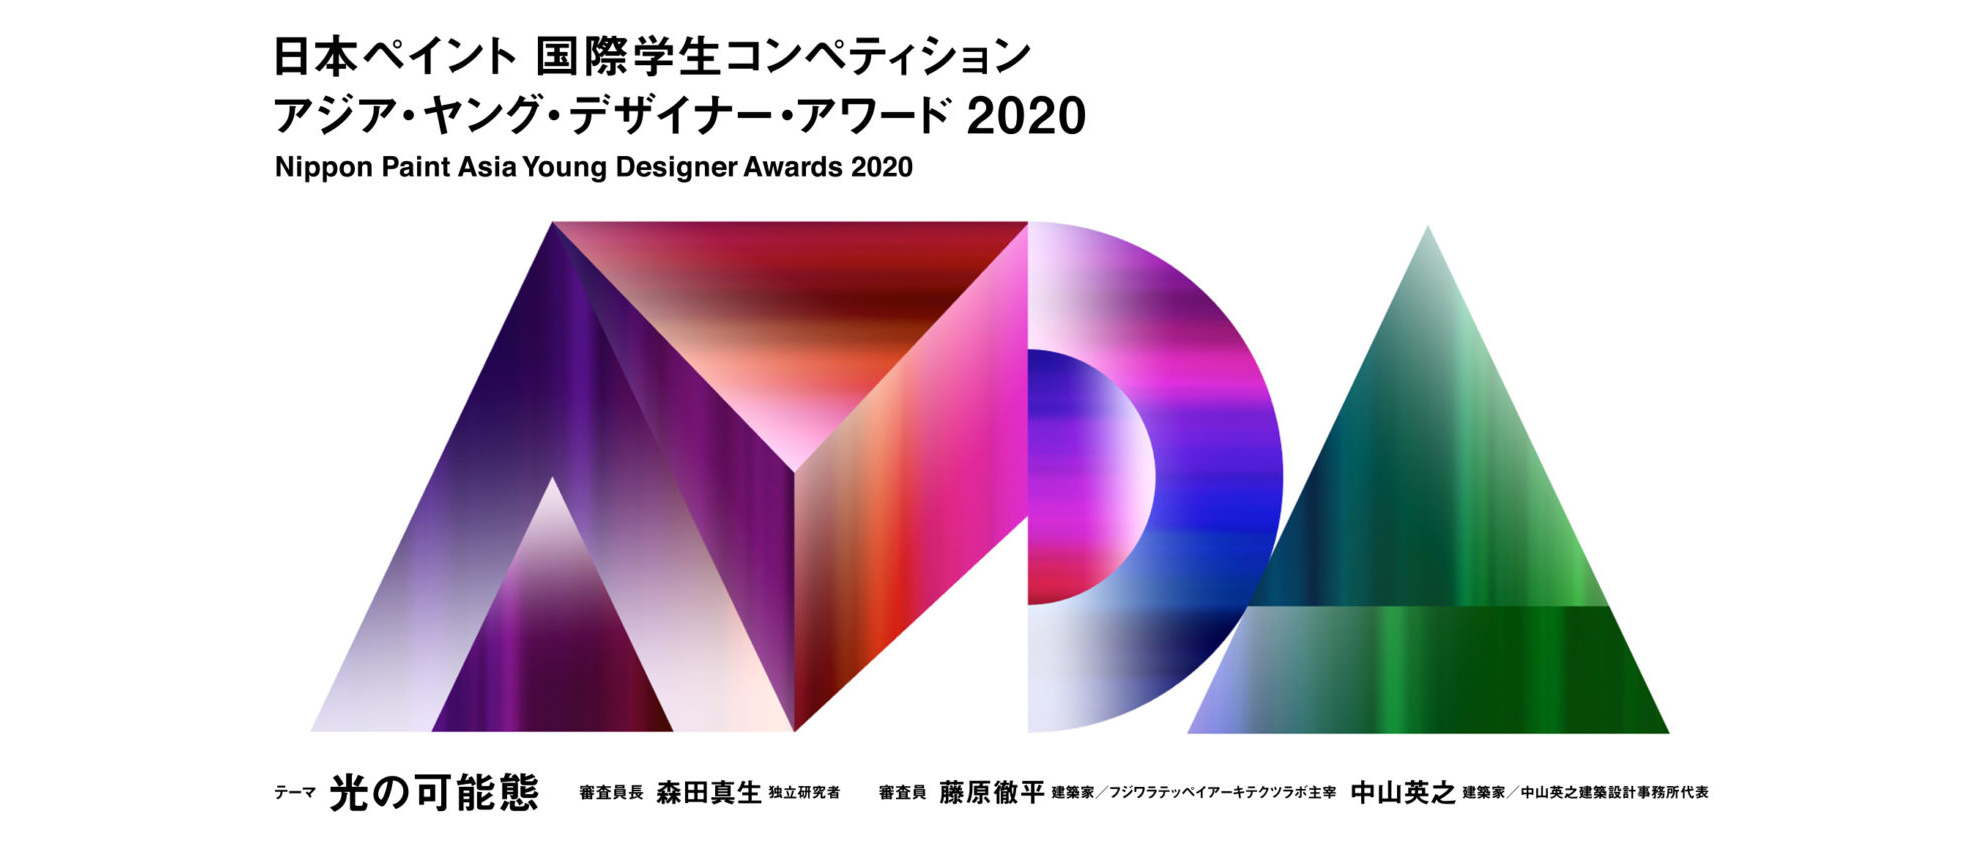 2020 AYDA 亚洲青年设计师大奖赛